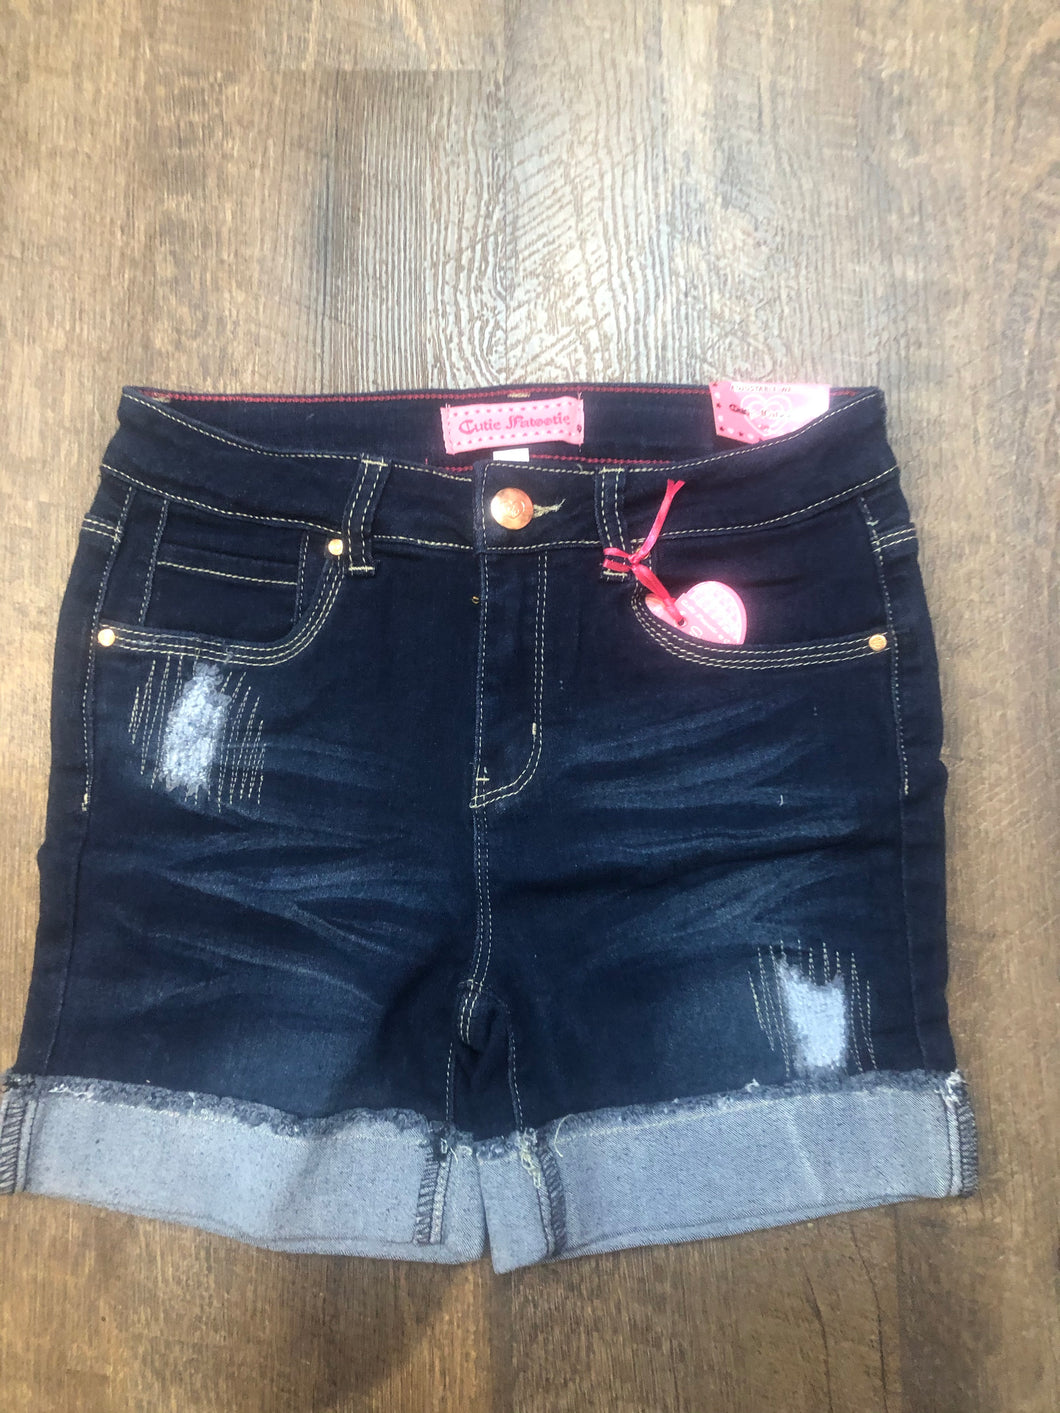 Girls distressed jean shorts